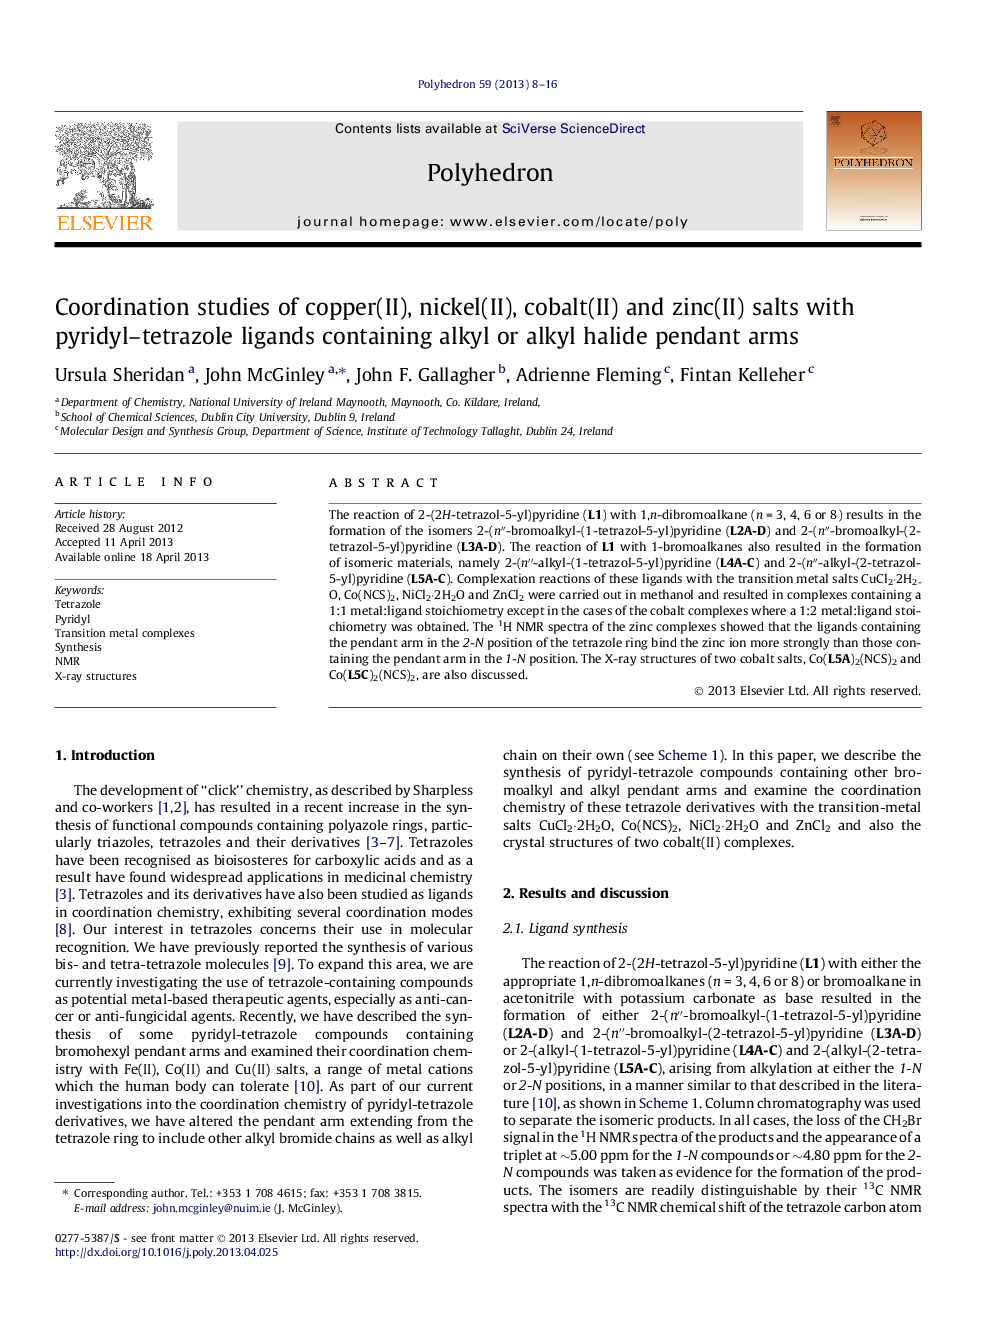 Coordination studies of copper(II), nickel(II), cobalt(II) and zinc(II) salts with pyridyl–tetrazole ligands containing alkyl or alkyl halide pendant arms